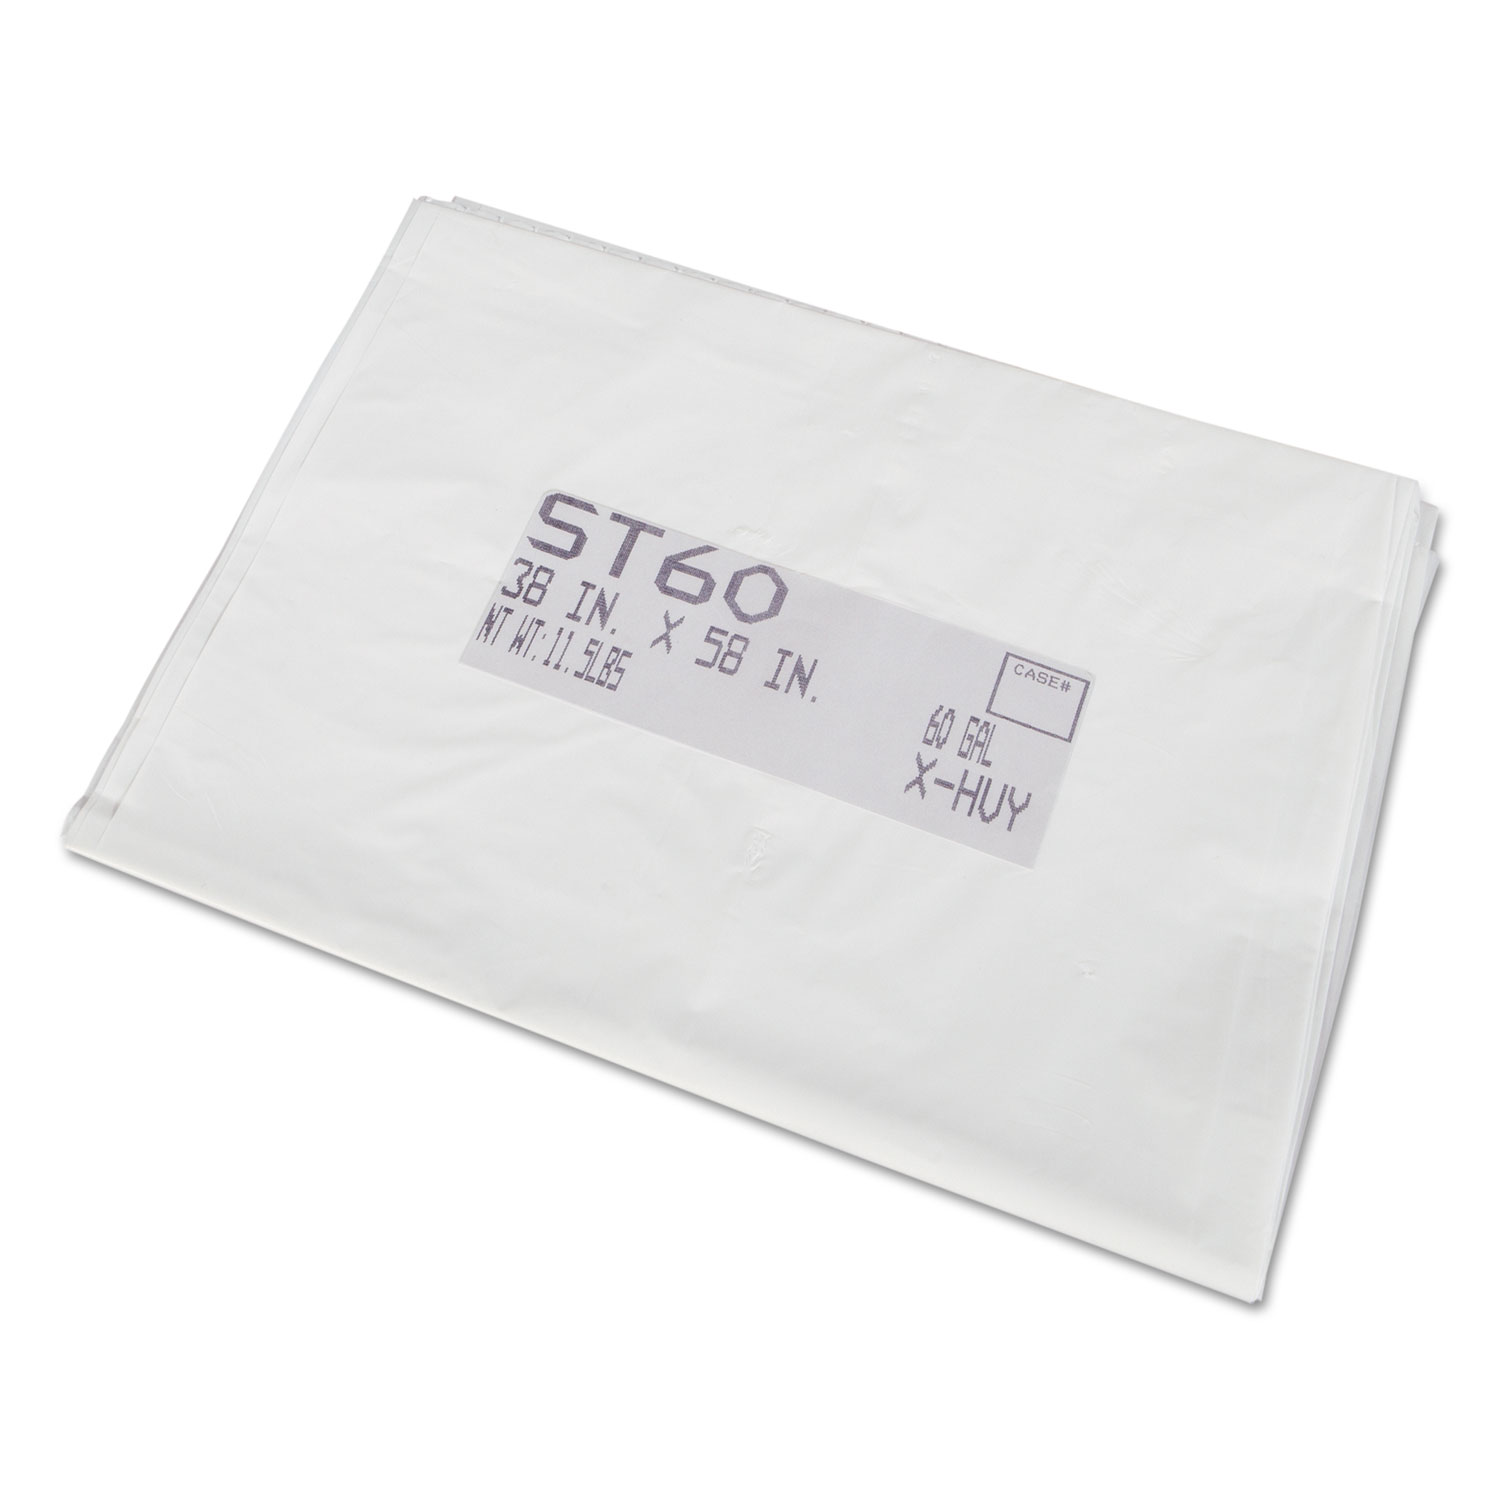  FlexSol ST36 ST-Super Tuff Trash Bags, 30 gal, 0.72 mil, 30 x 36, White, 200/Carton (ESXST36) 